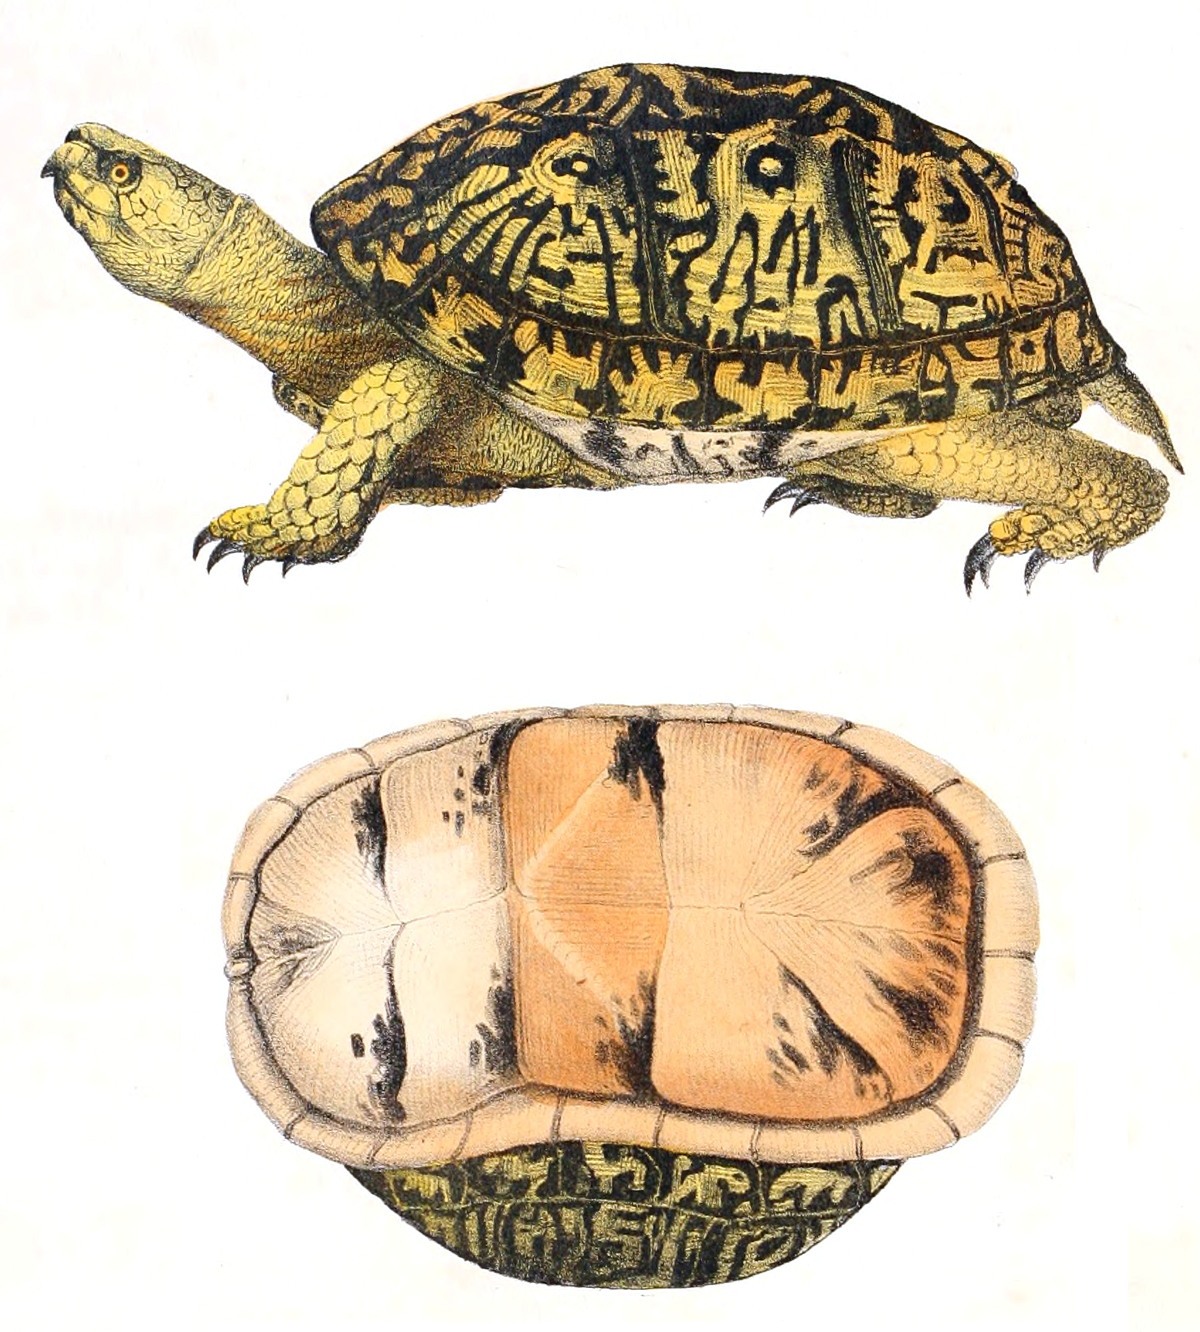 Коробчатая черепаха